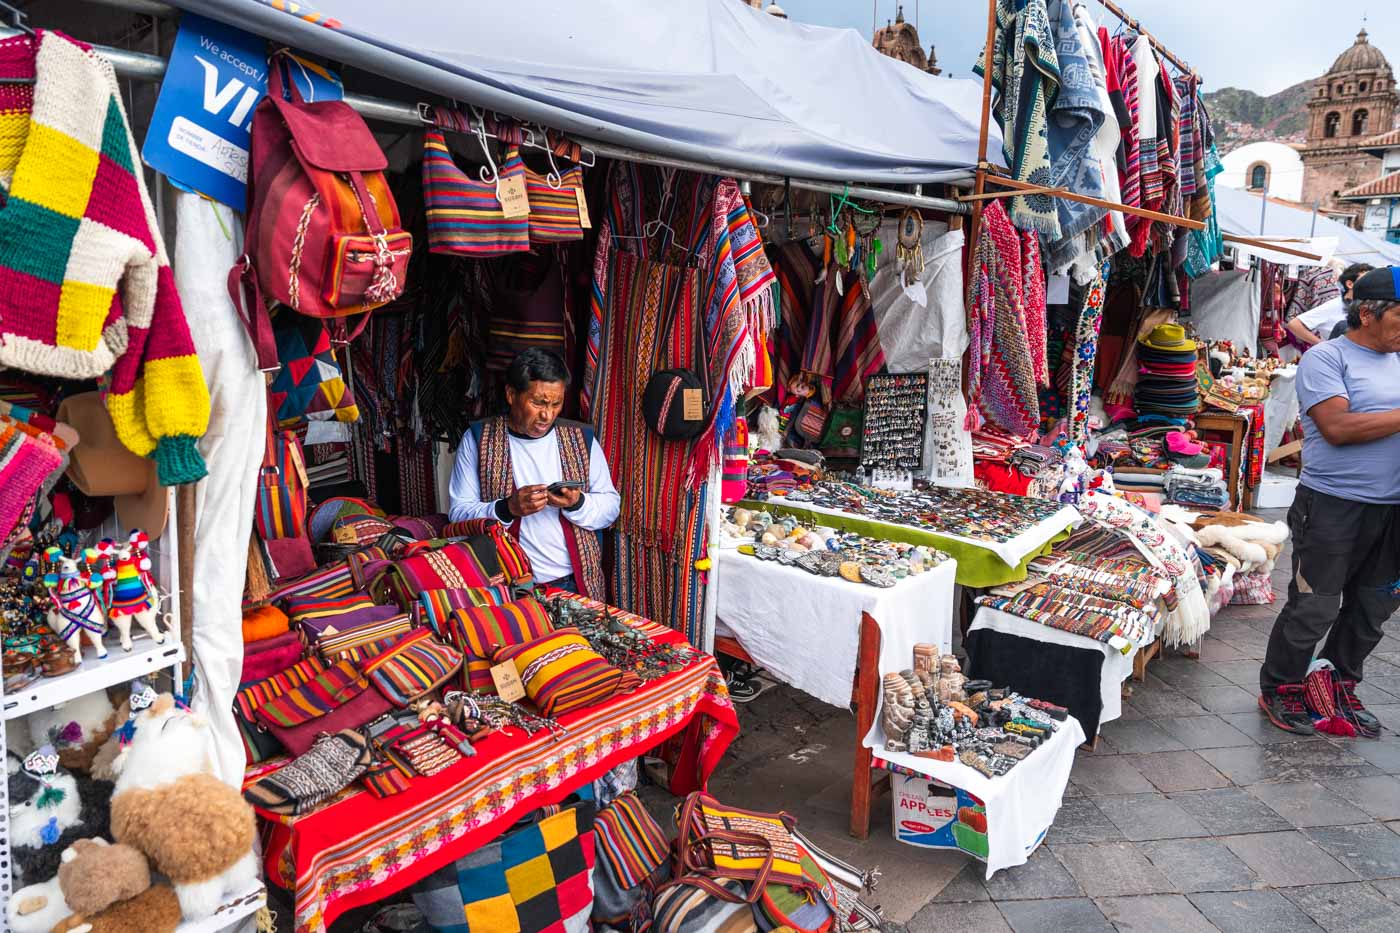 Vendors selling handmade goods at the Santuranticuy Christmas market in Cusco.